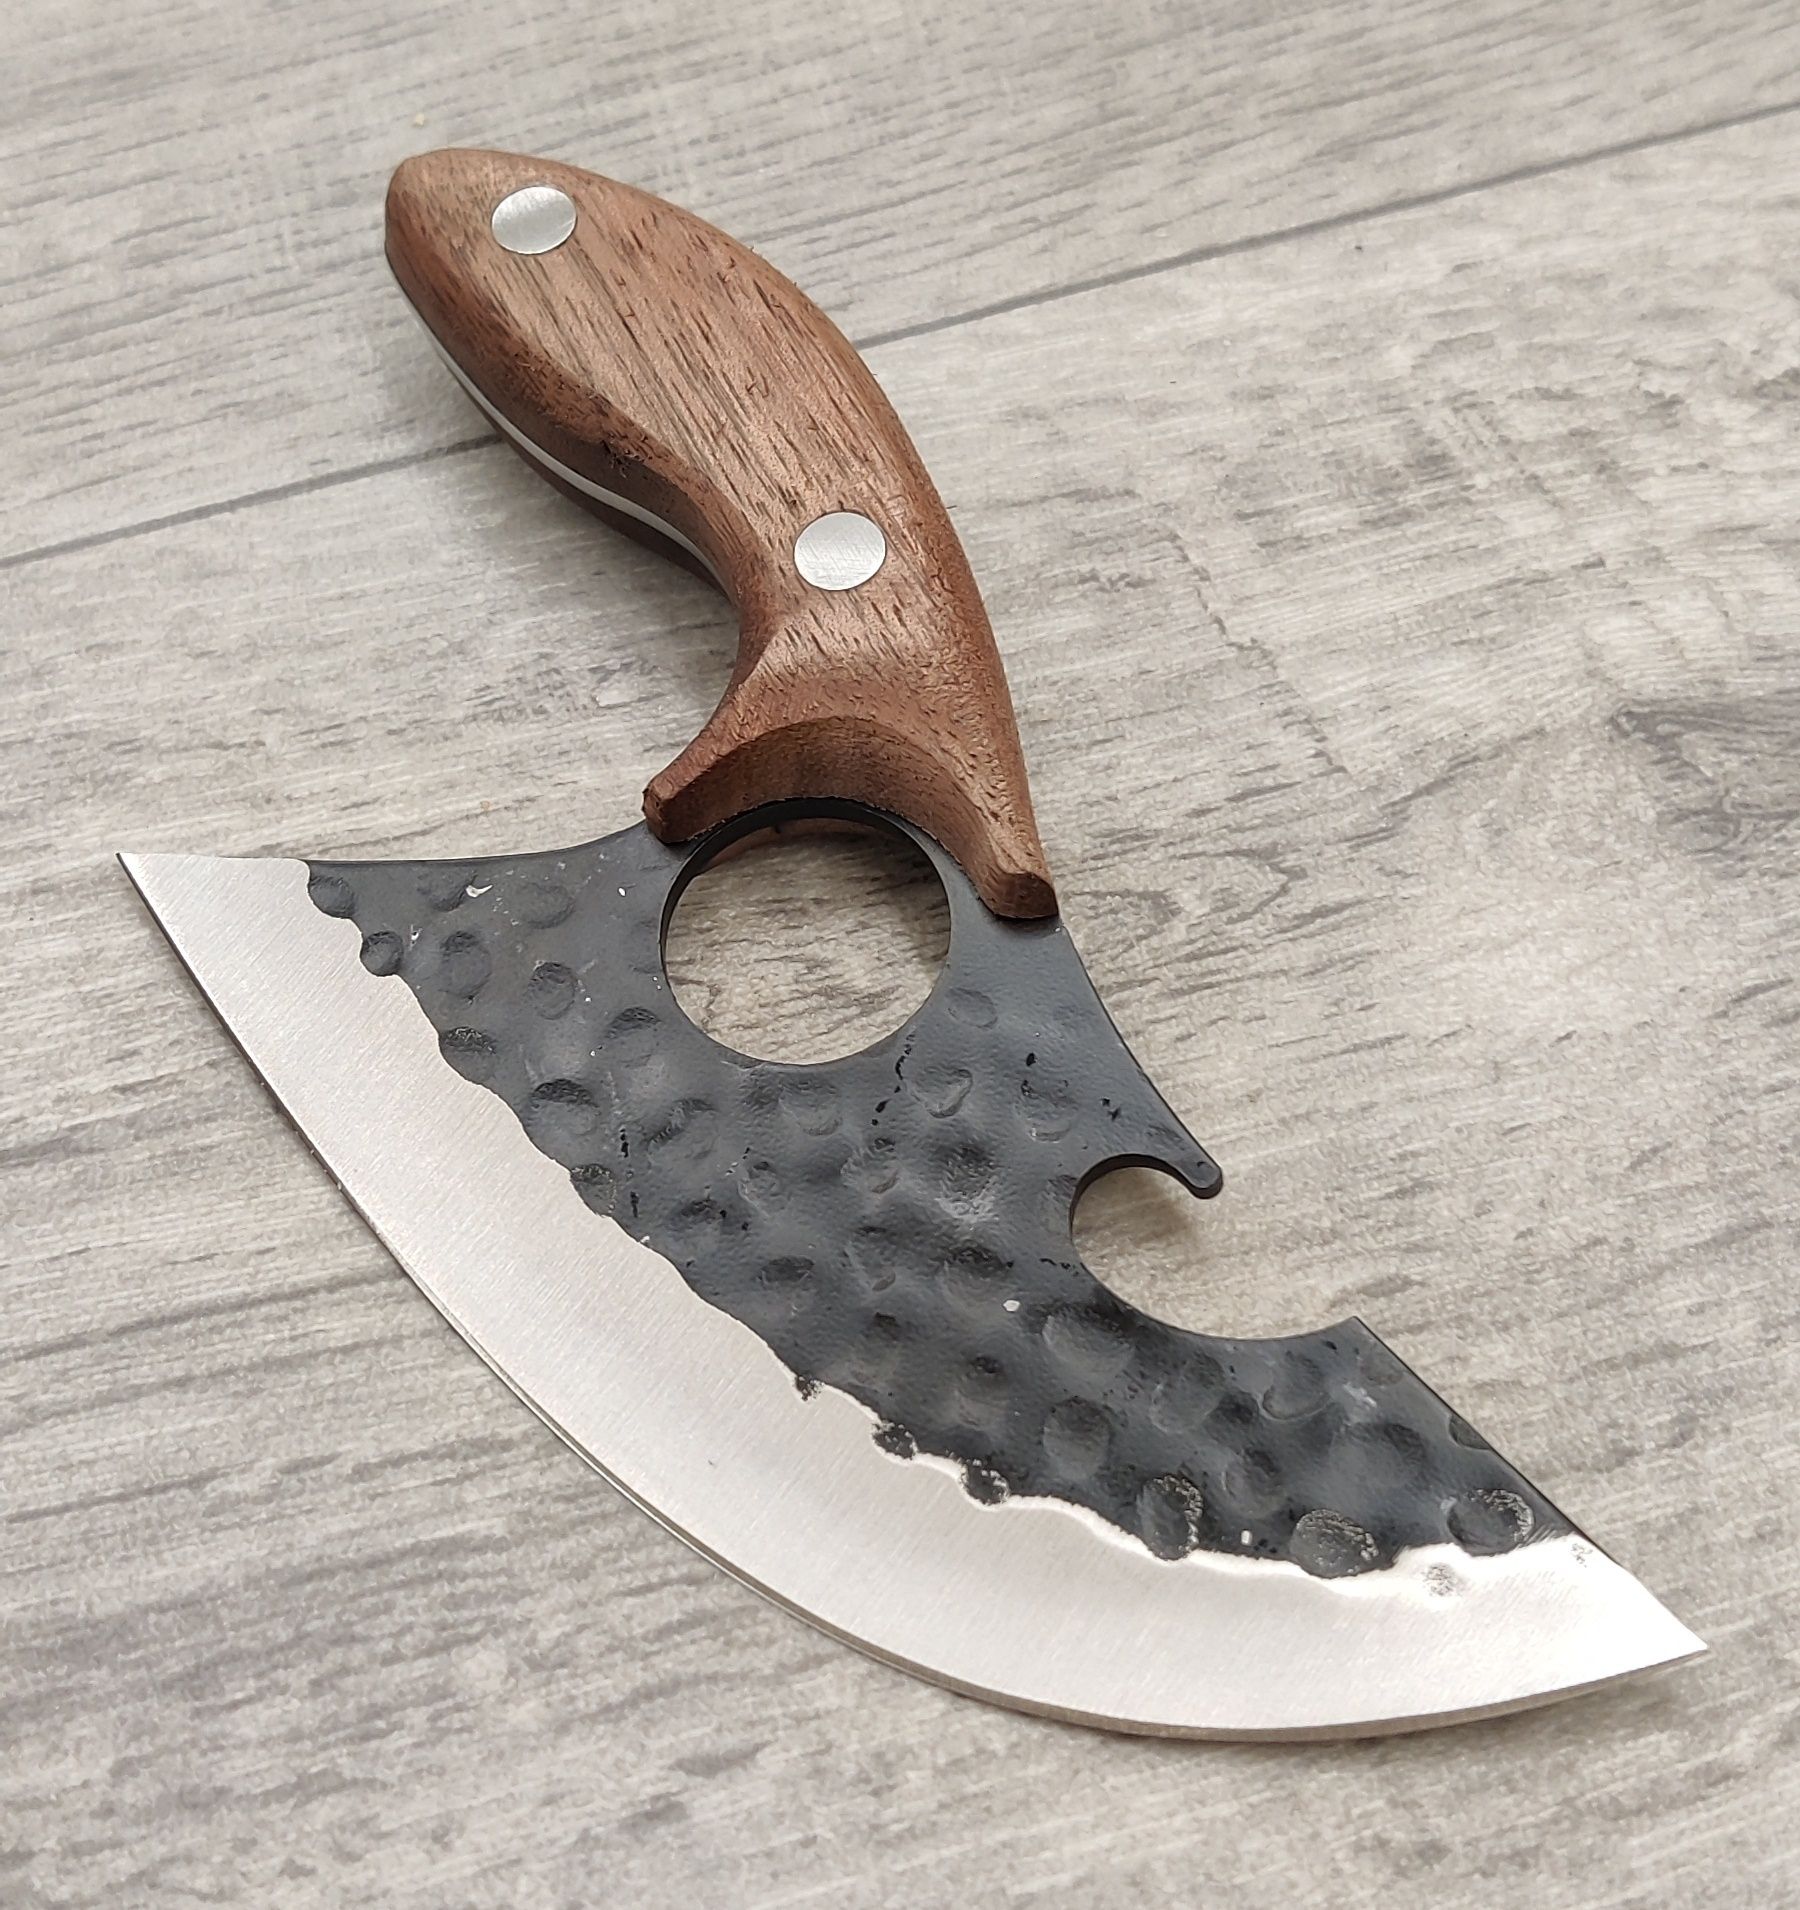 Разделочный нож, нож для обвалки мяса